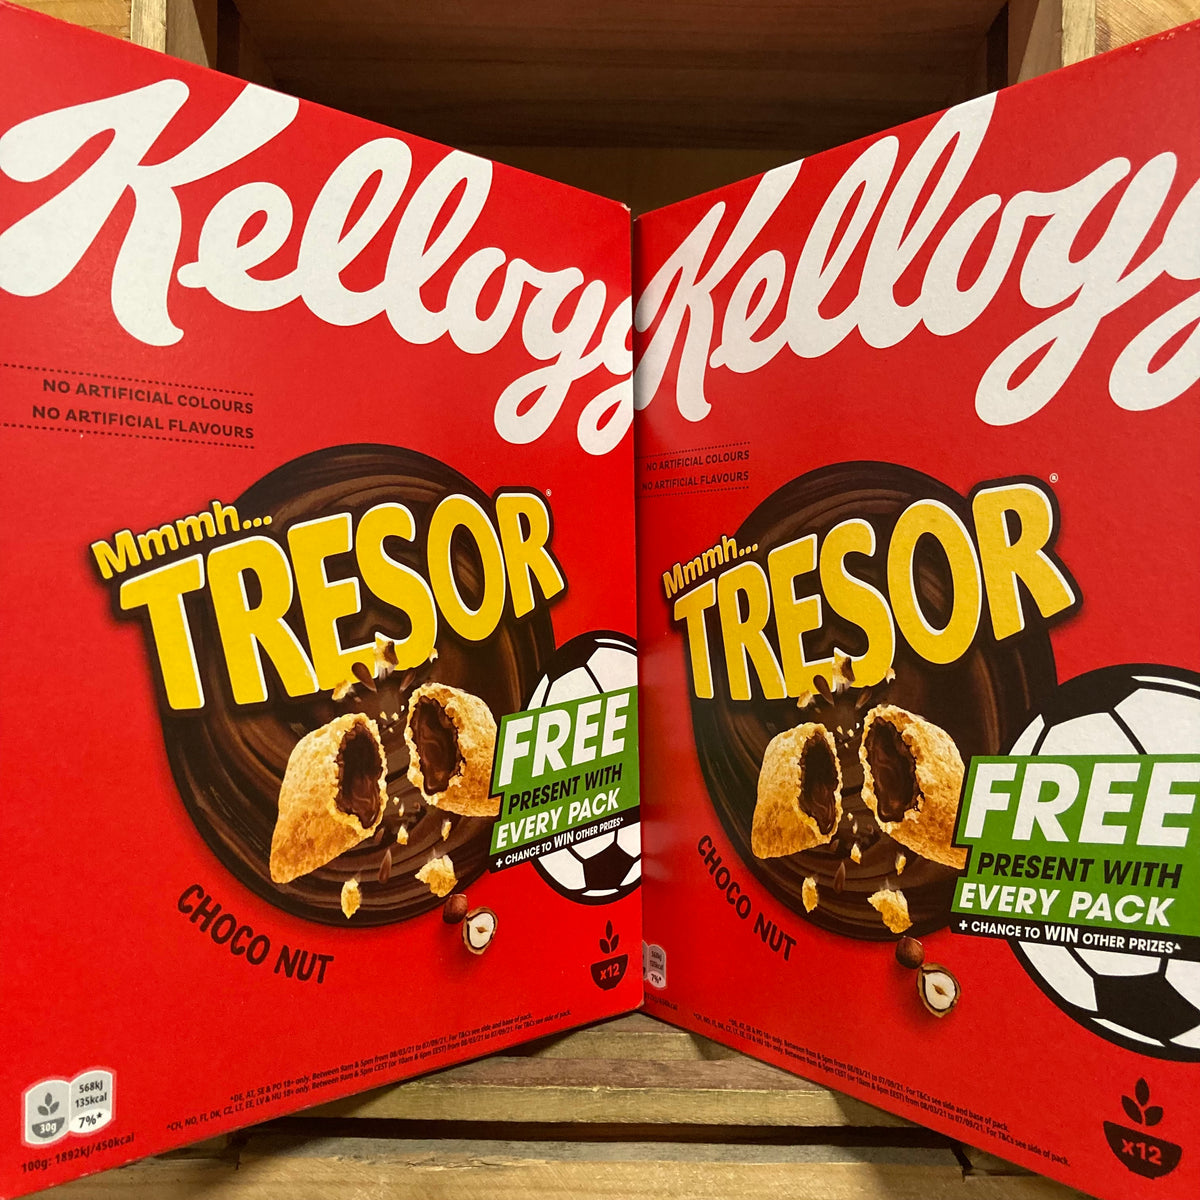 Kellogg's Tresor Chocolate Hazelnut 620g 620g – American Cash and Carry